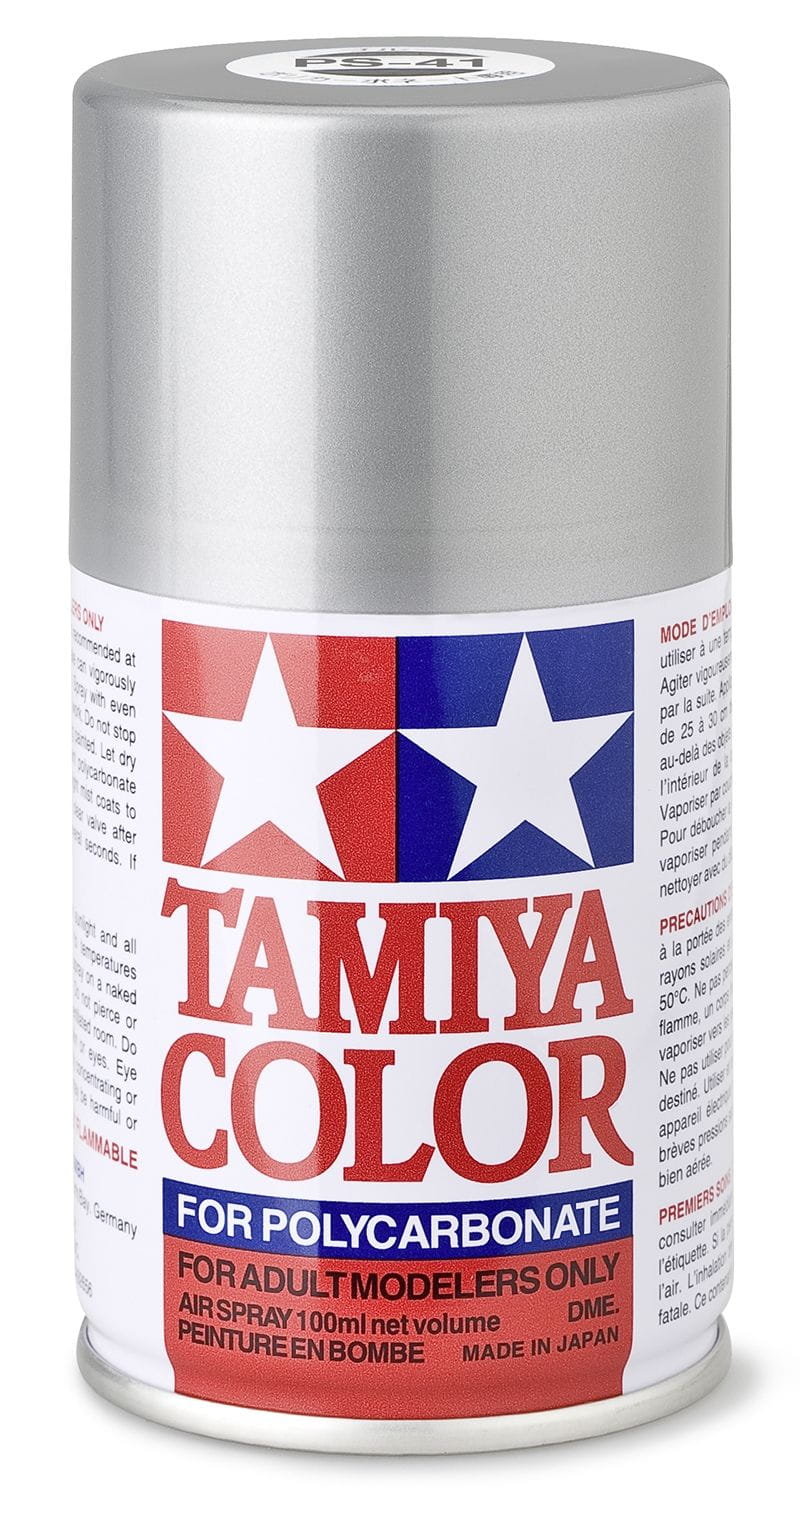 Tamiya PS-41 BRIGHT SILVER Sprühfarbe 100ml für Polycarbonat ( Lexanfarbe )